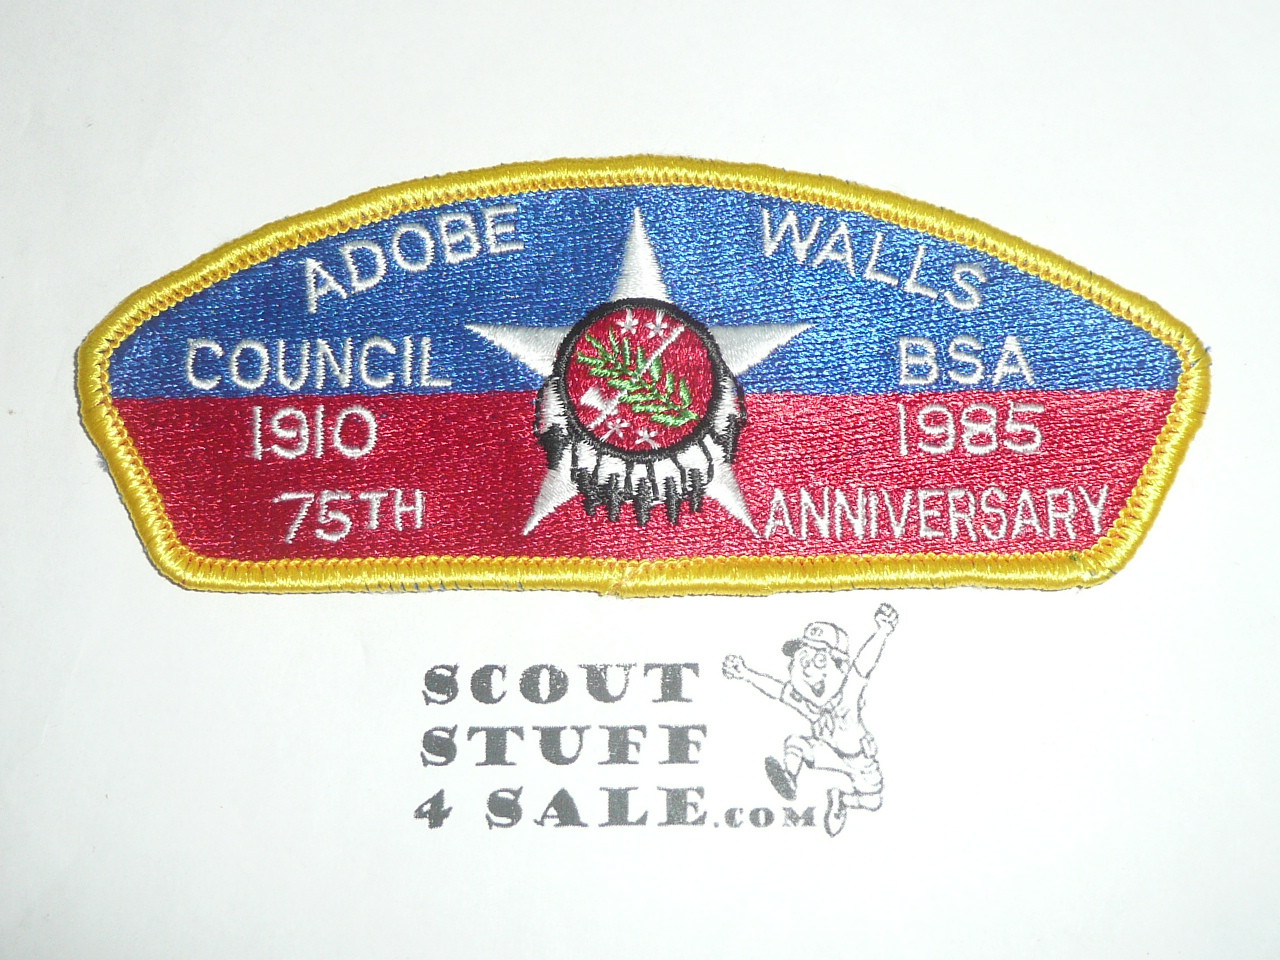 Adobe Walls Council s2 CSP - 75th BSA Anniversary MERGED